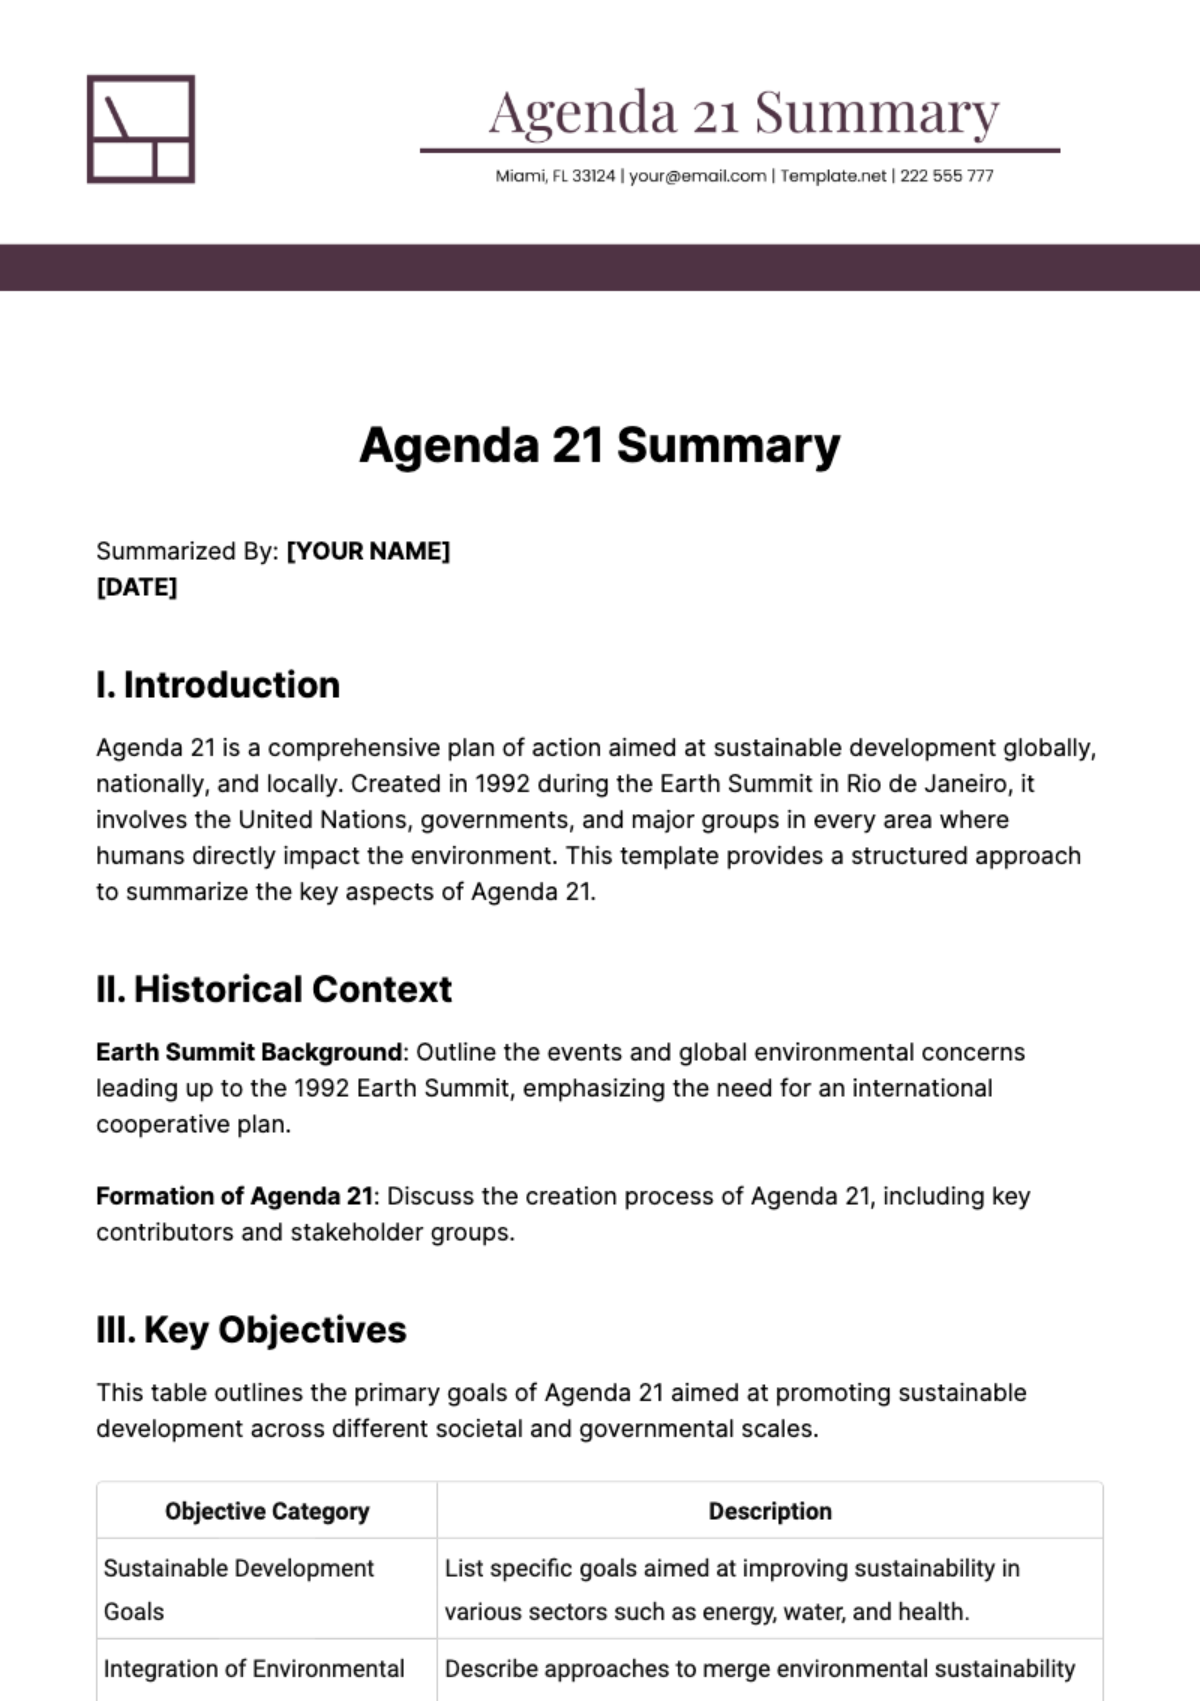 Agenda 21 Summary Template